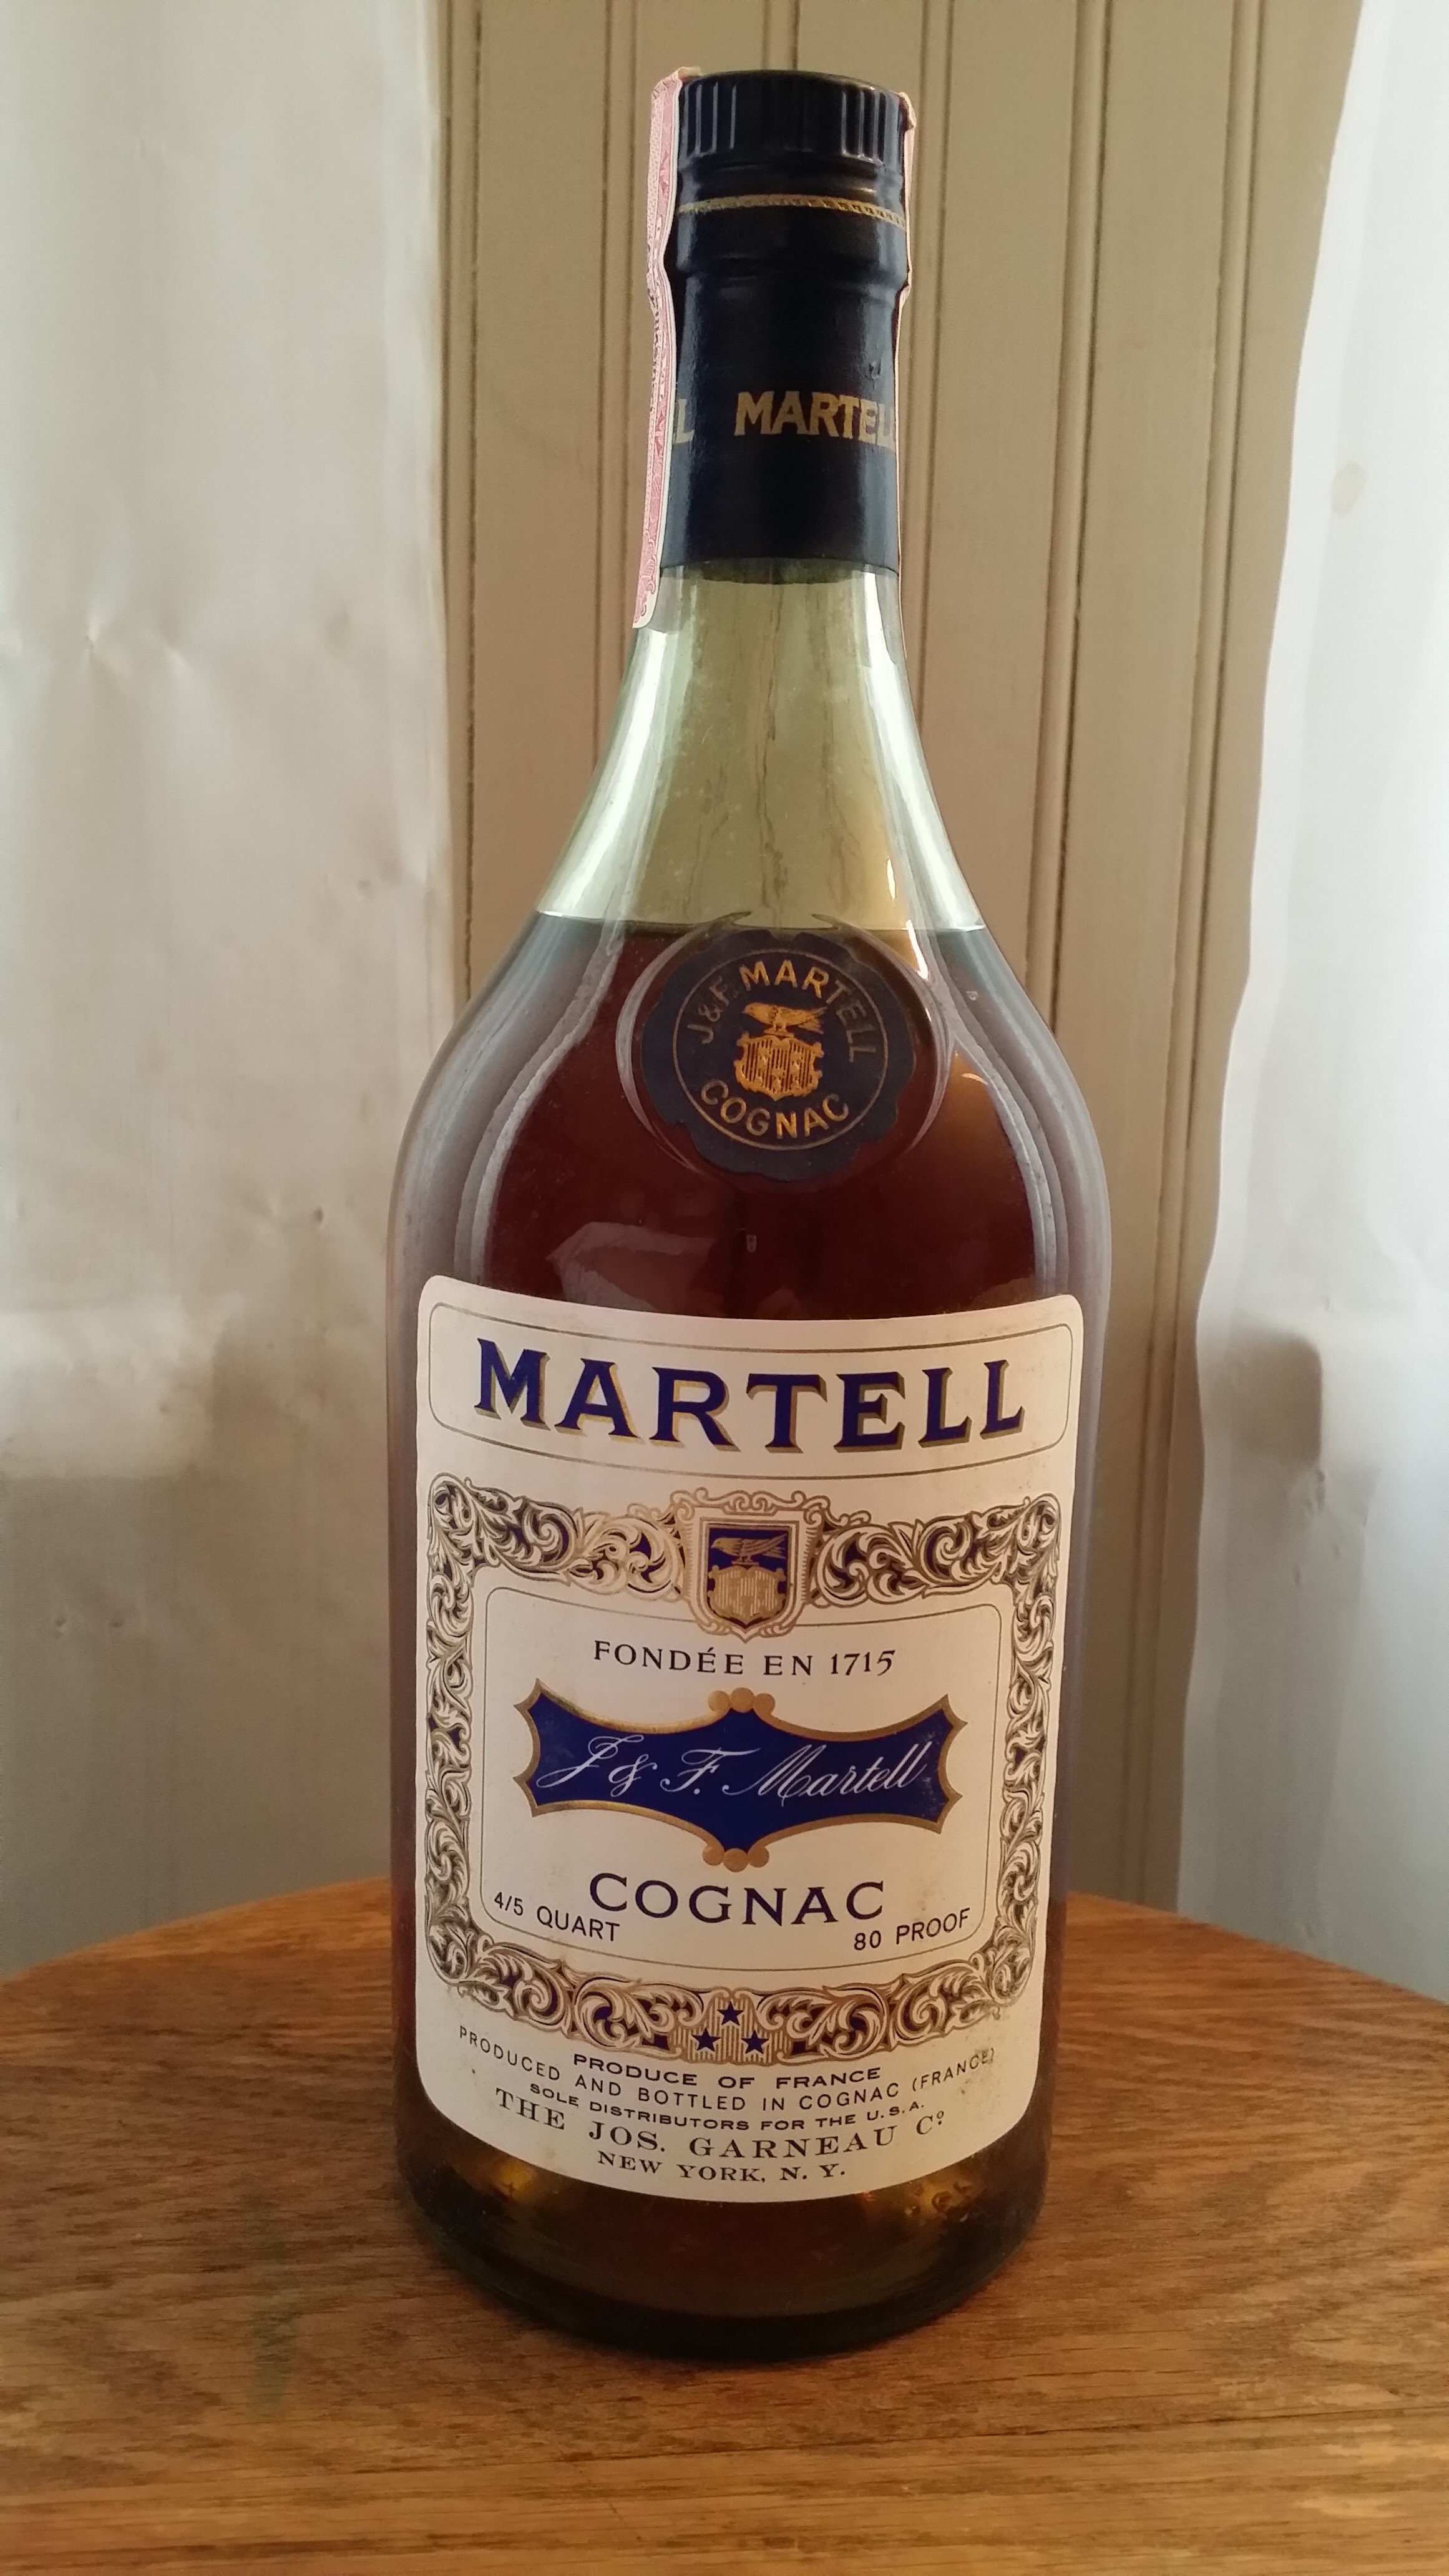 Martell Cognac Bottle to buy | Cognac Expert: The Cognac Blog about ...